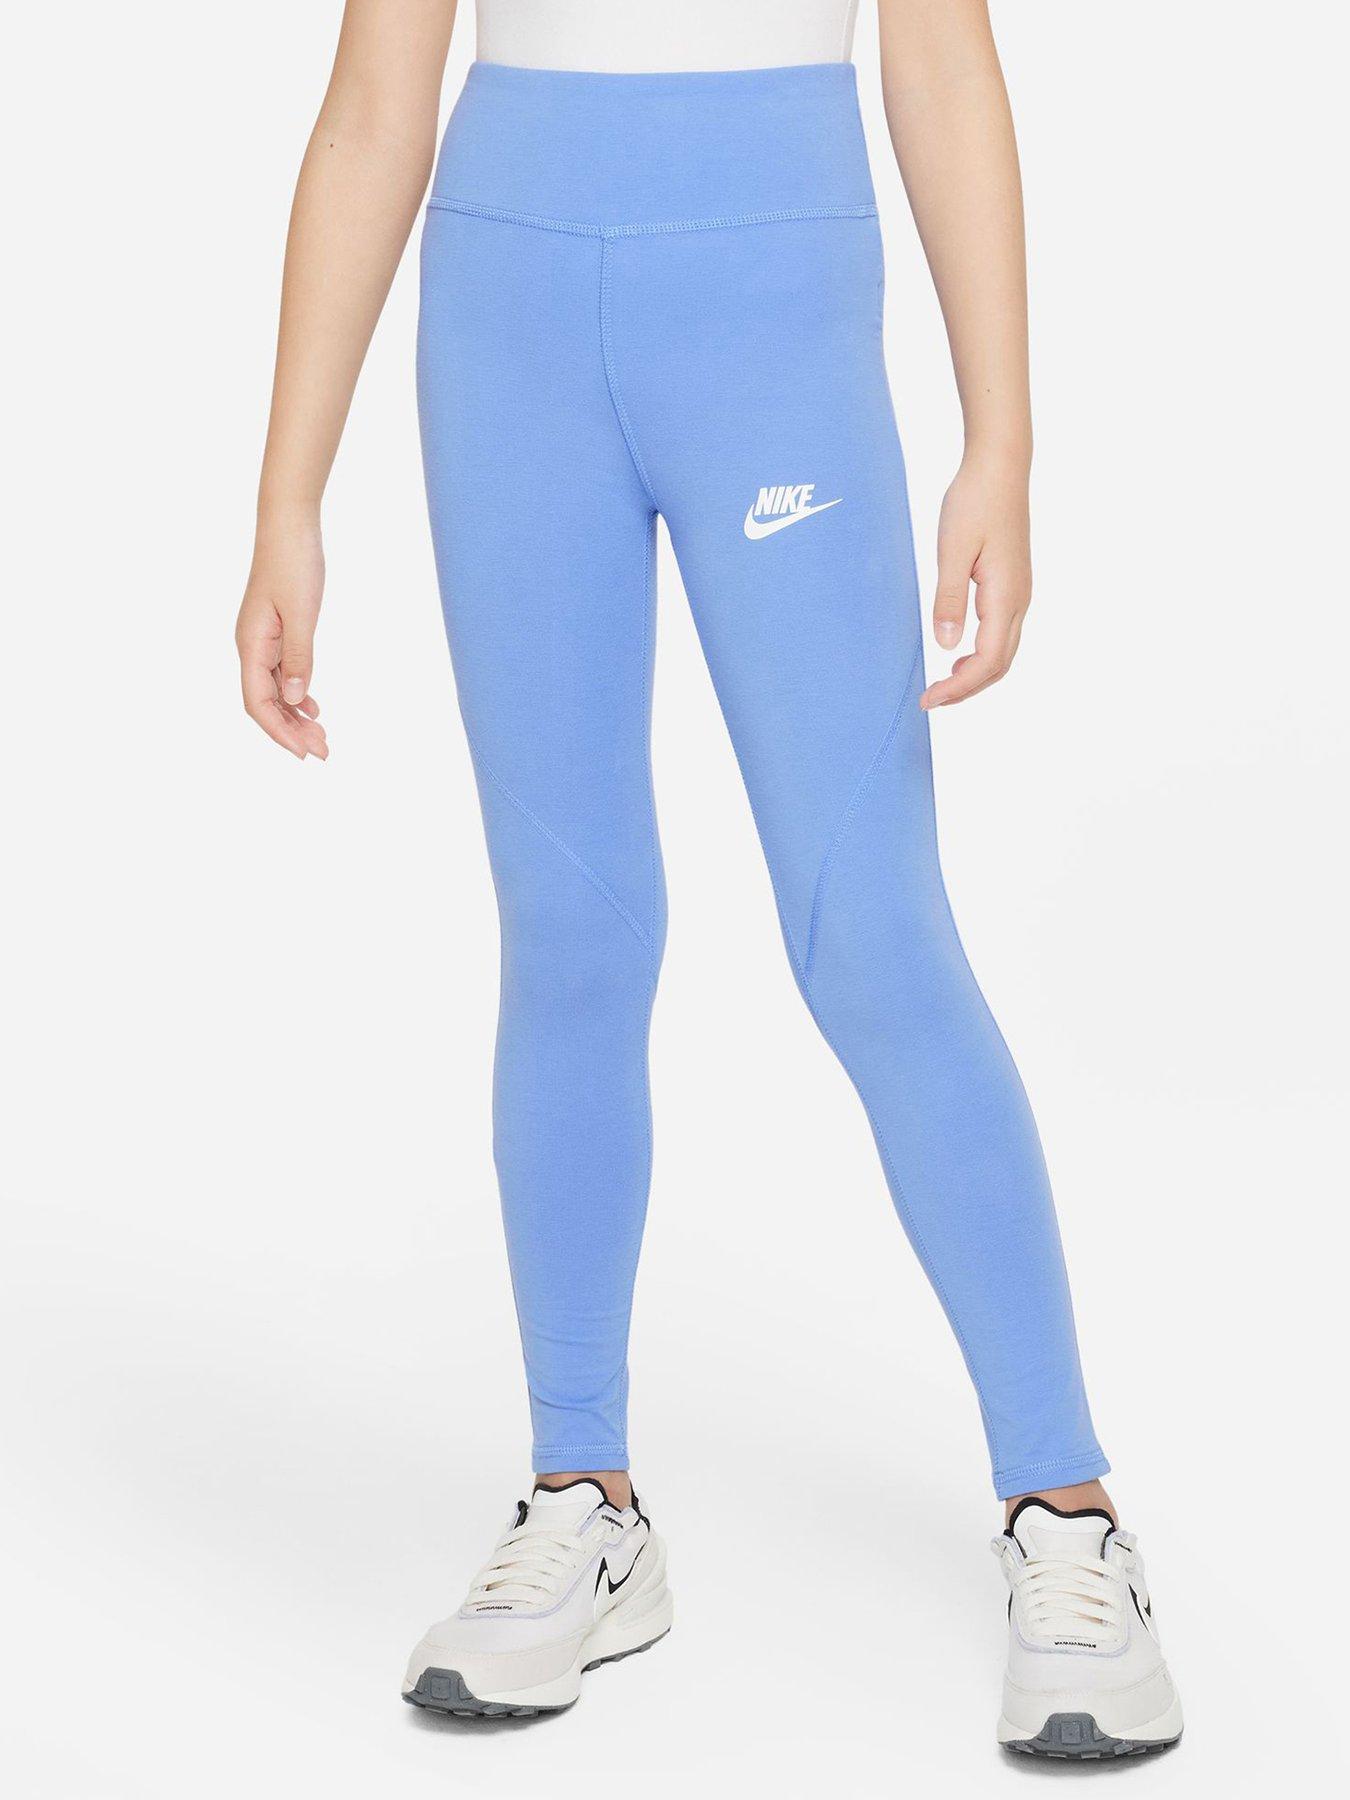 Nike Yoga Pants: Move & Stretch With Ease in Nike Yoga Pants